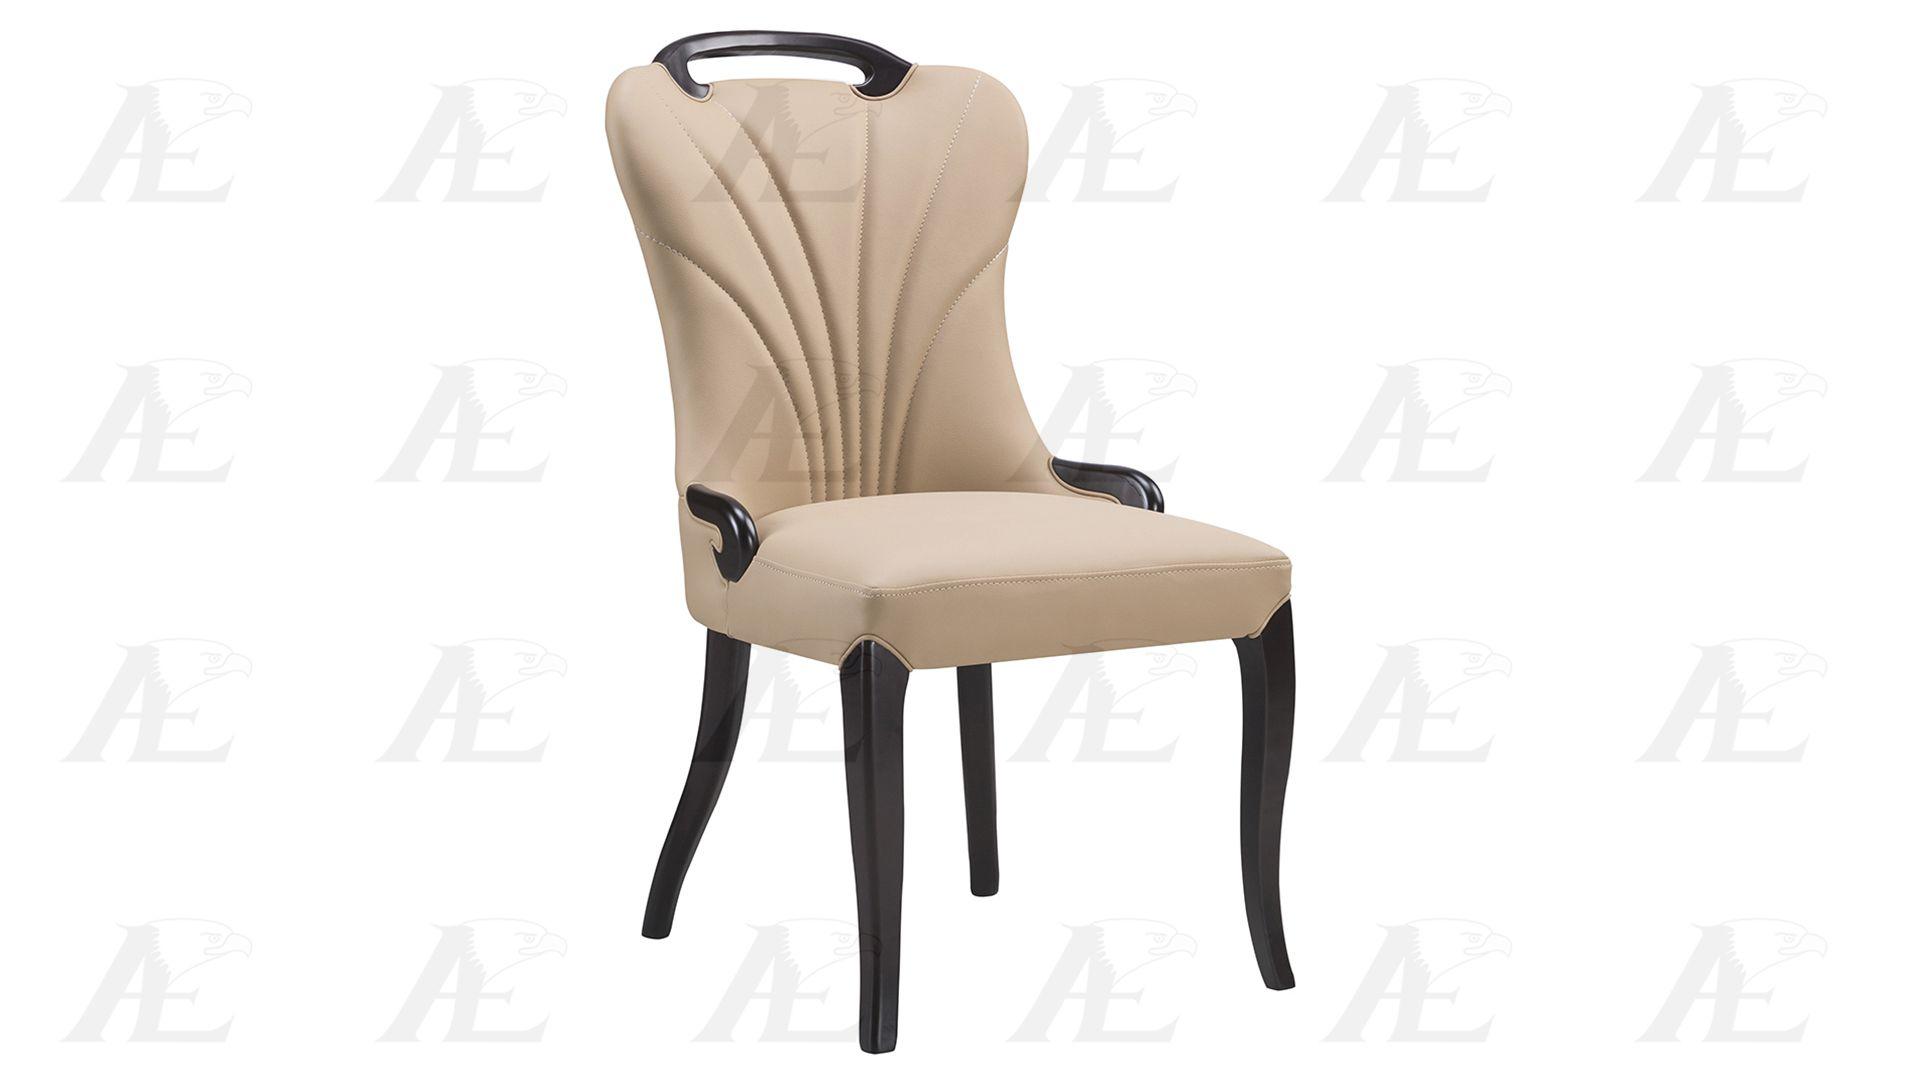 

    
American Eagle Furniture CK-H604-TAN Dining Chair Tan CK-H604-TAN
